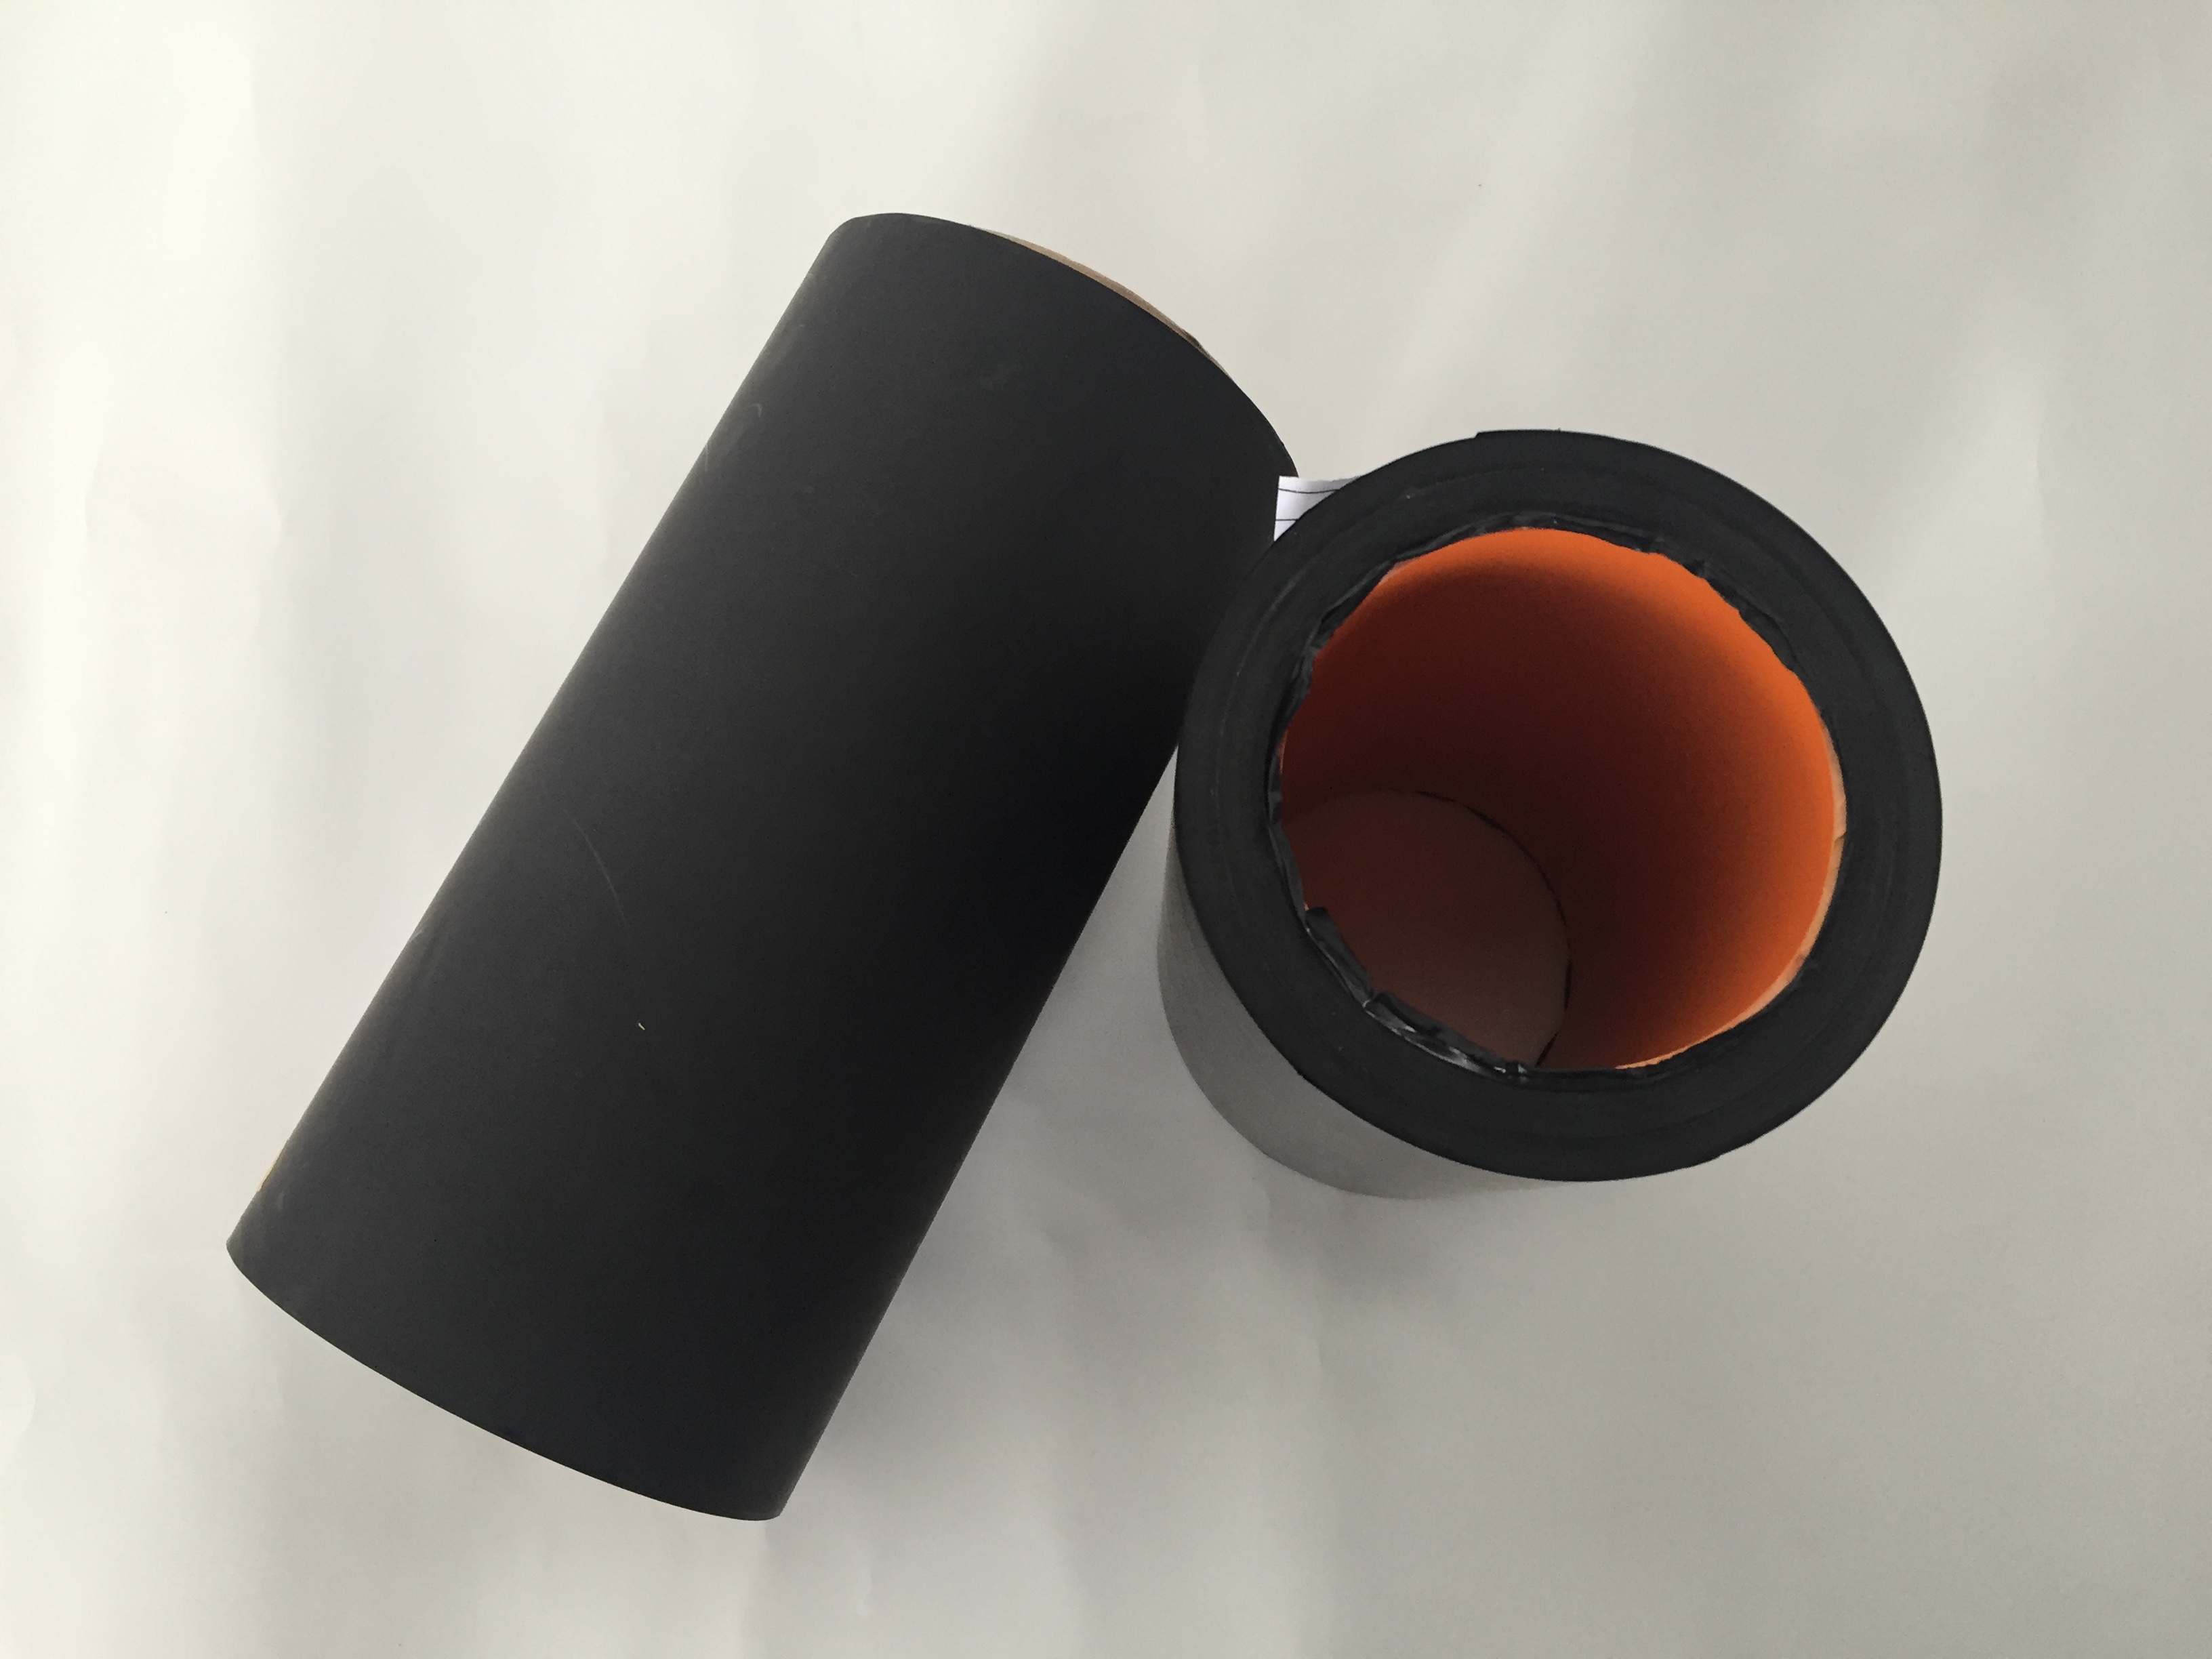 Roll Pe Black carbon conductive film For Ekg